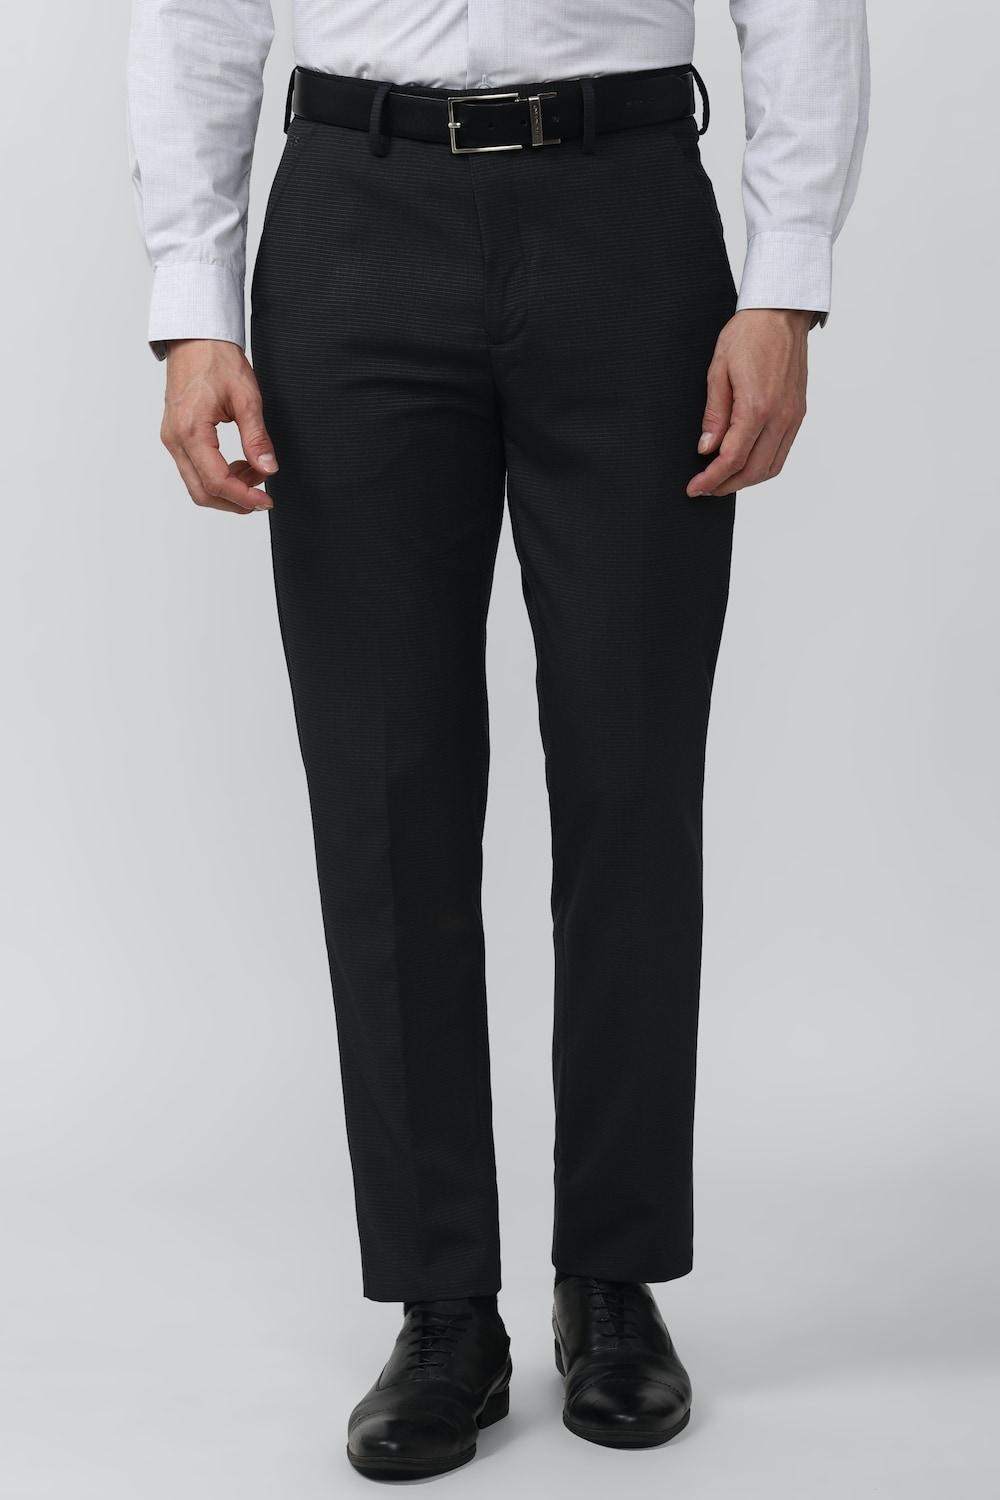 Peter England  Men Black Stripe Slim Fit Formal Trousers